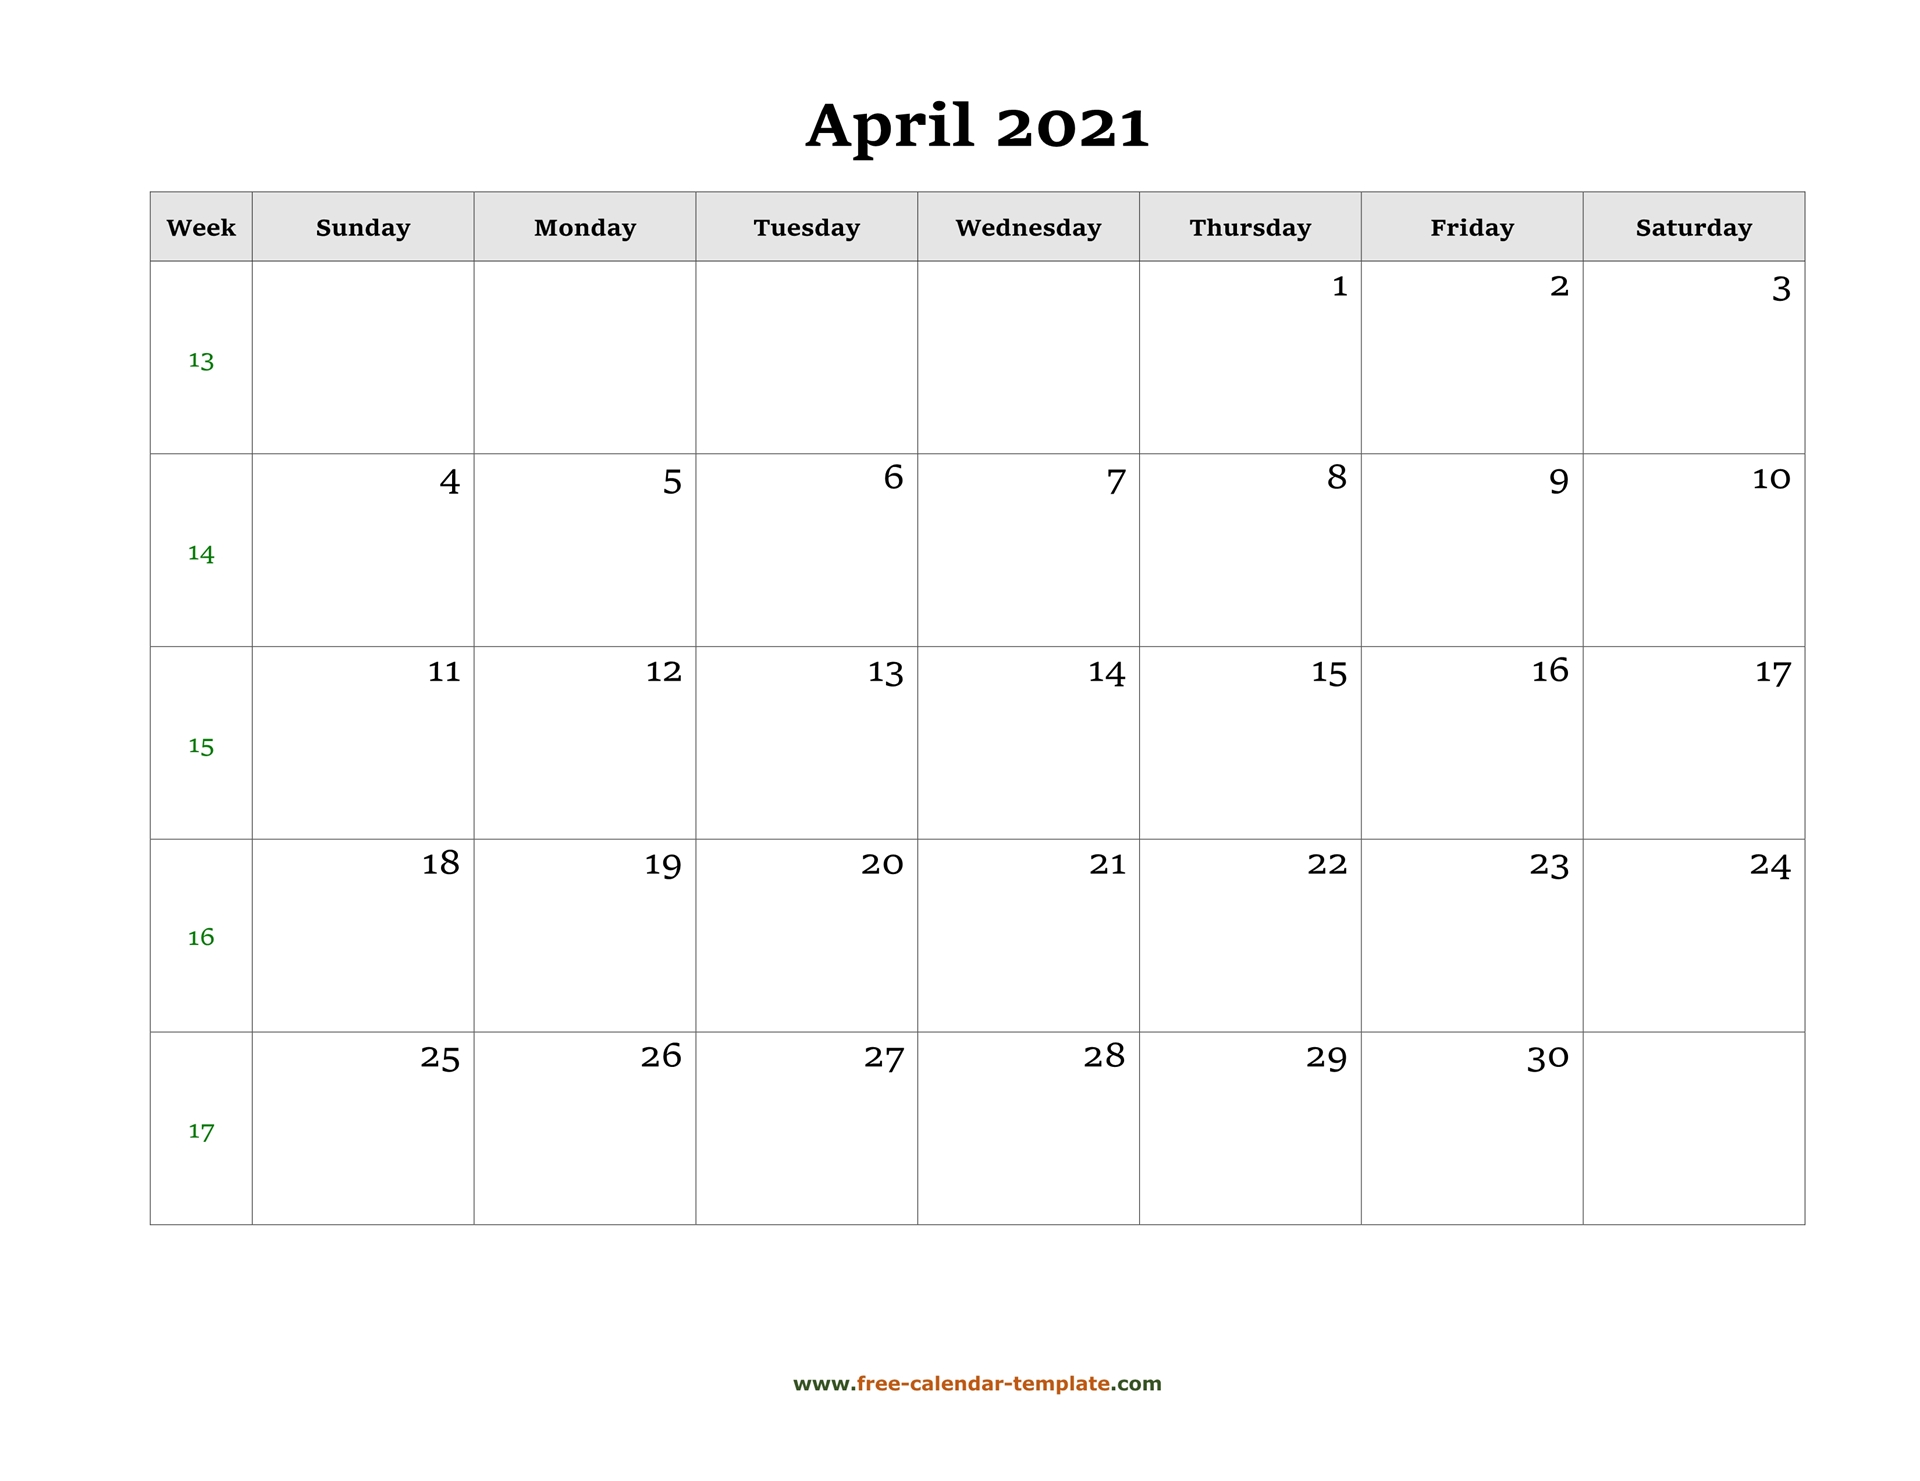 Free 2021 Calendar Blank April Template Horizontal Free Calendar Template Com